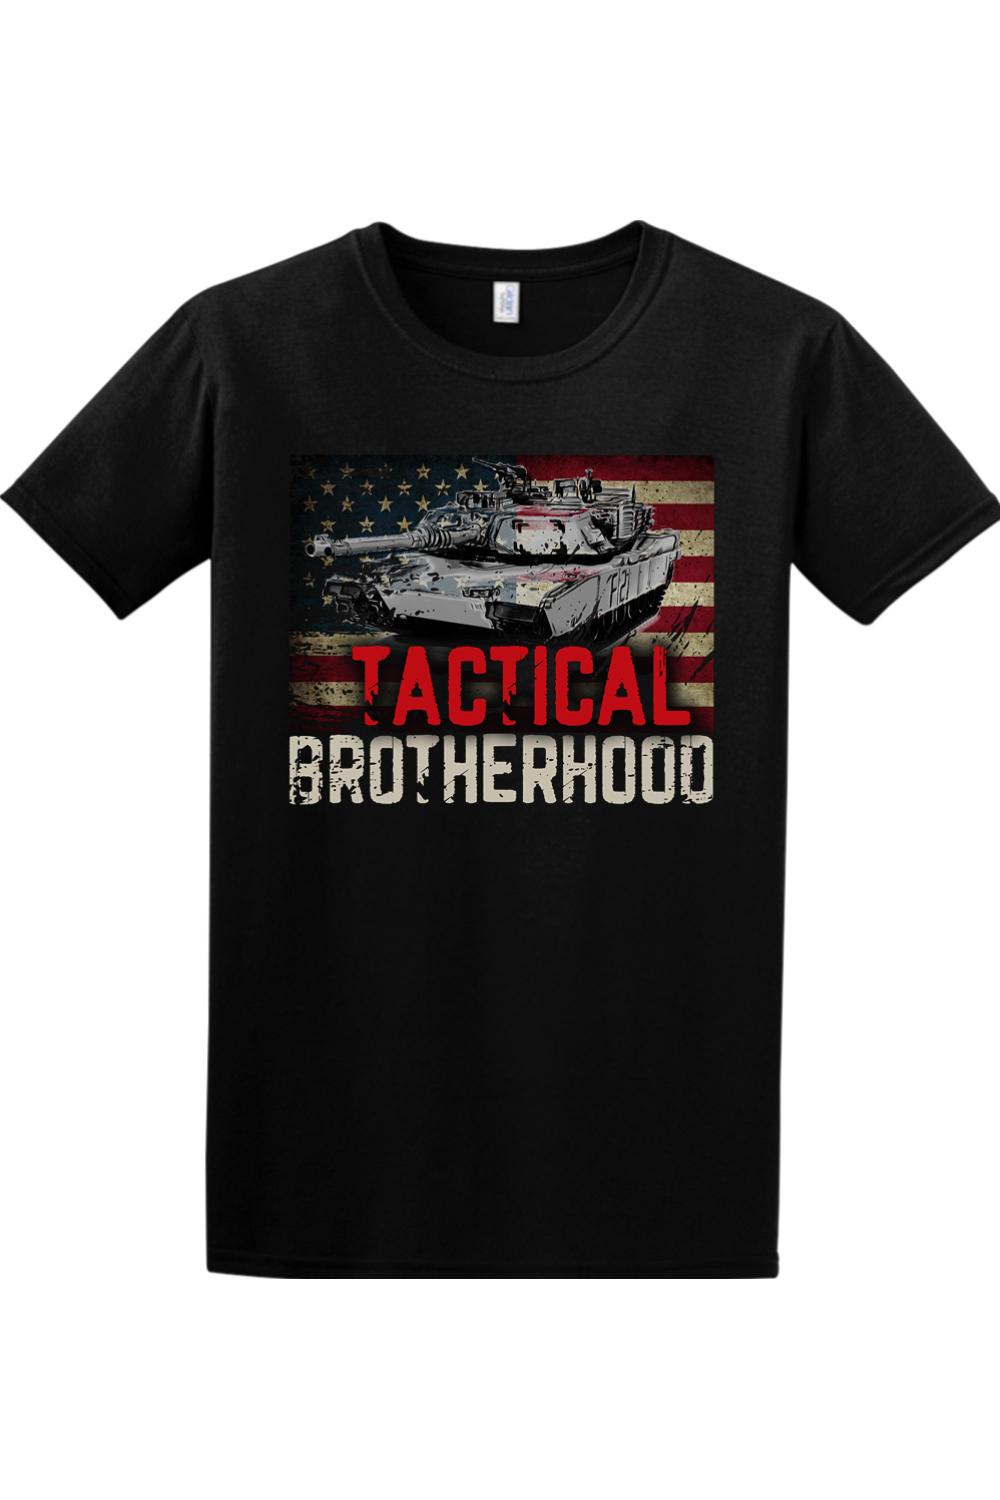 OG 1 - M1 Abrams - Tactical Brotherhood